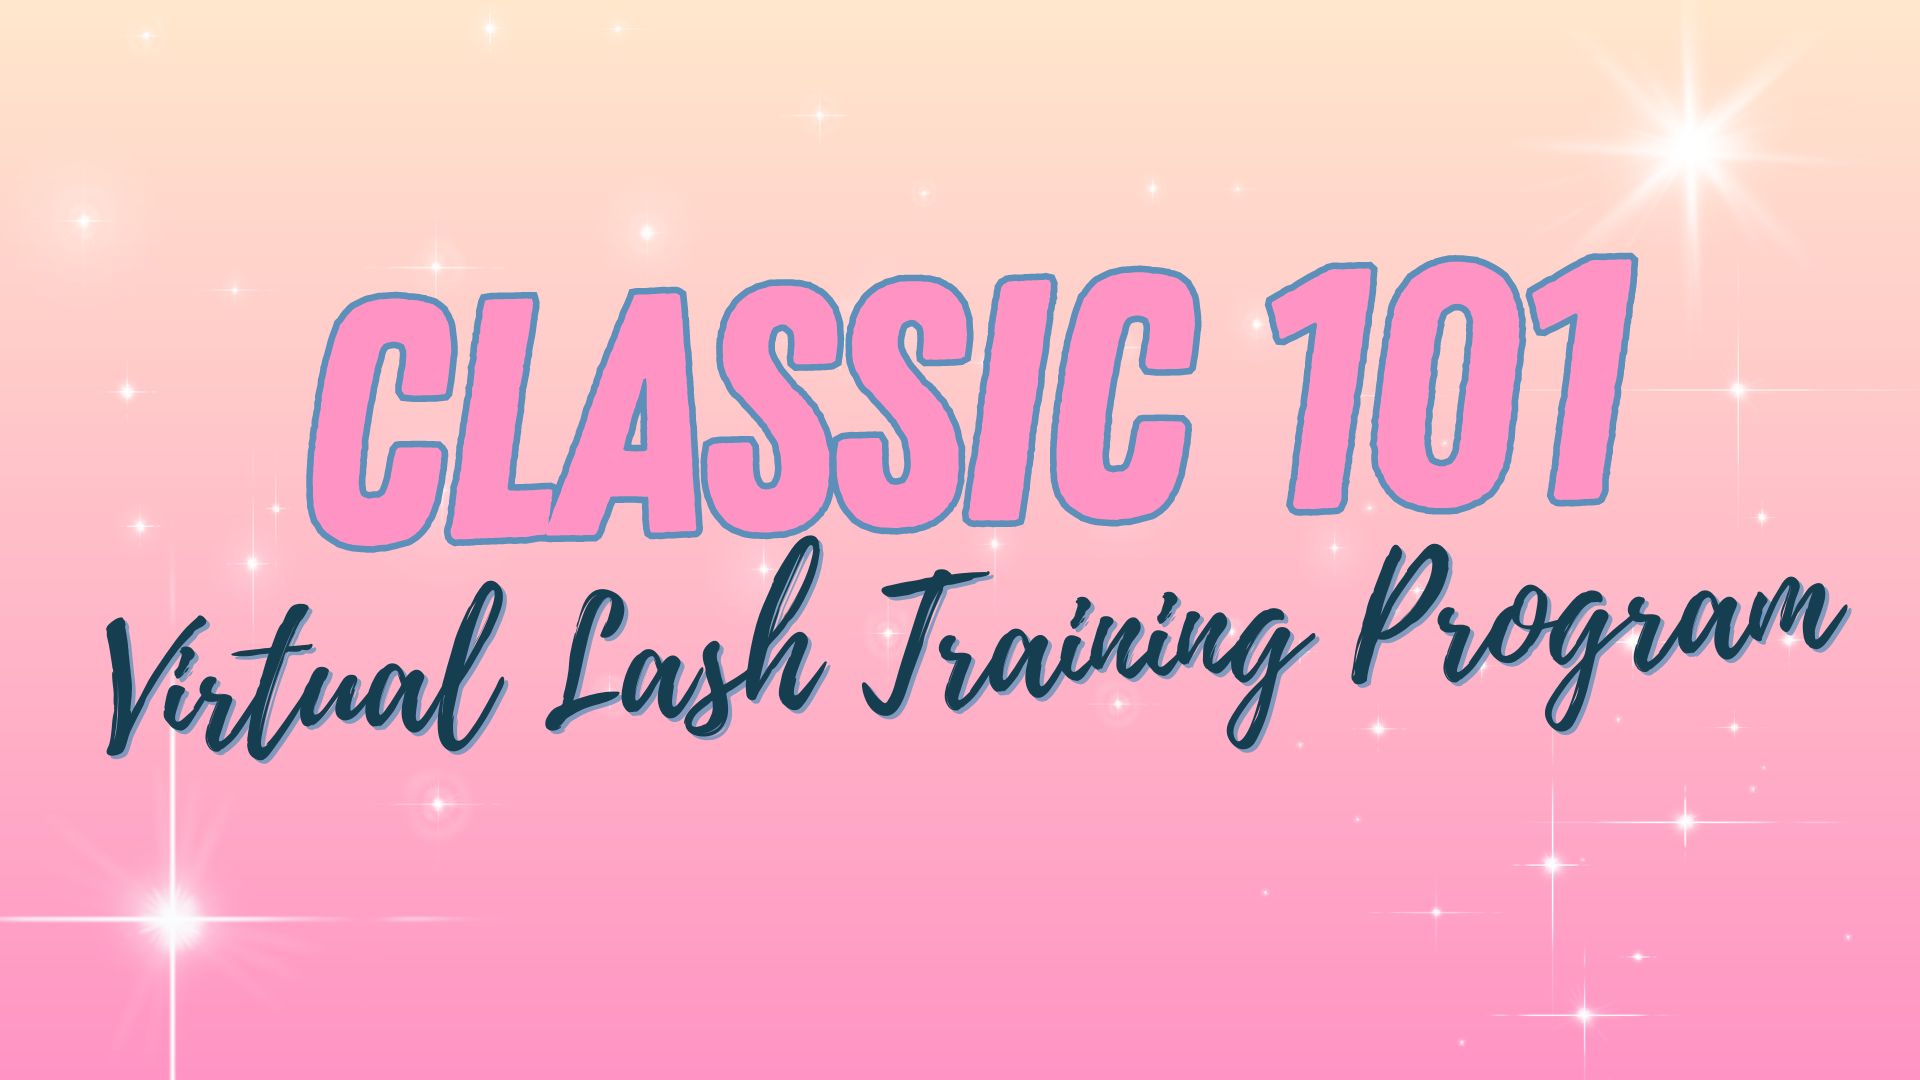 Classic 101 Virtual Lash Training Program